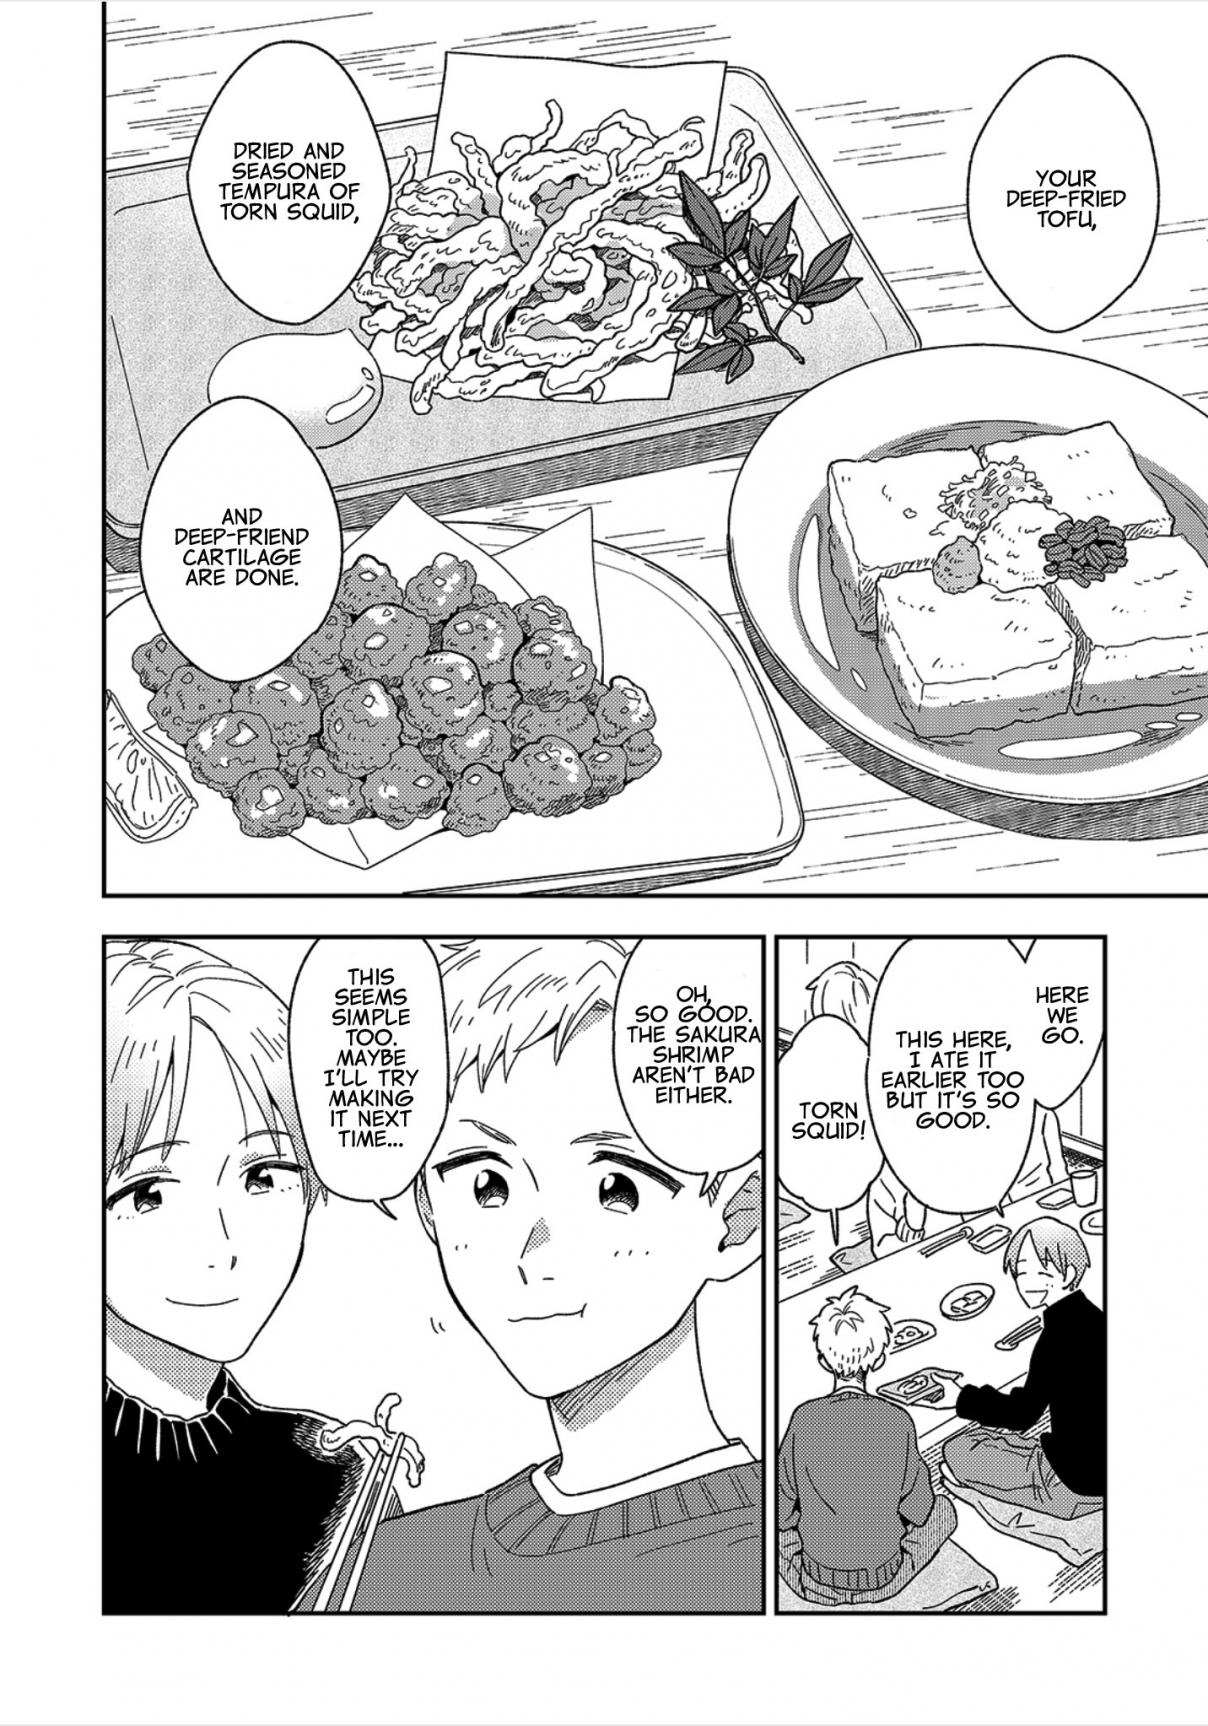 High School Boys Are Hungry Again Today Vol. 1 Ch. 8 Izakaya